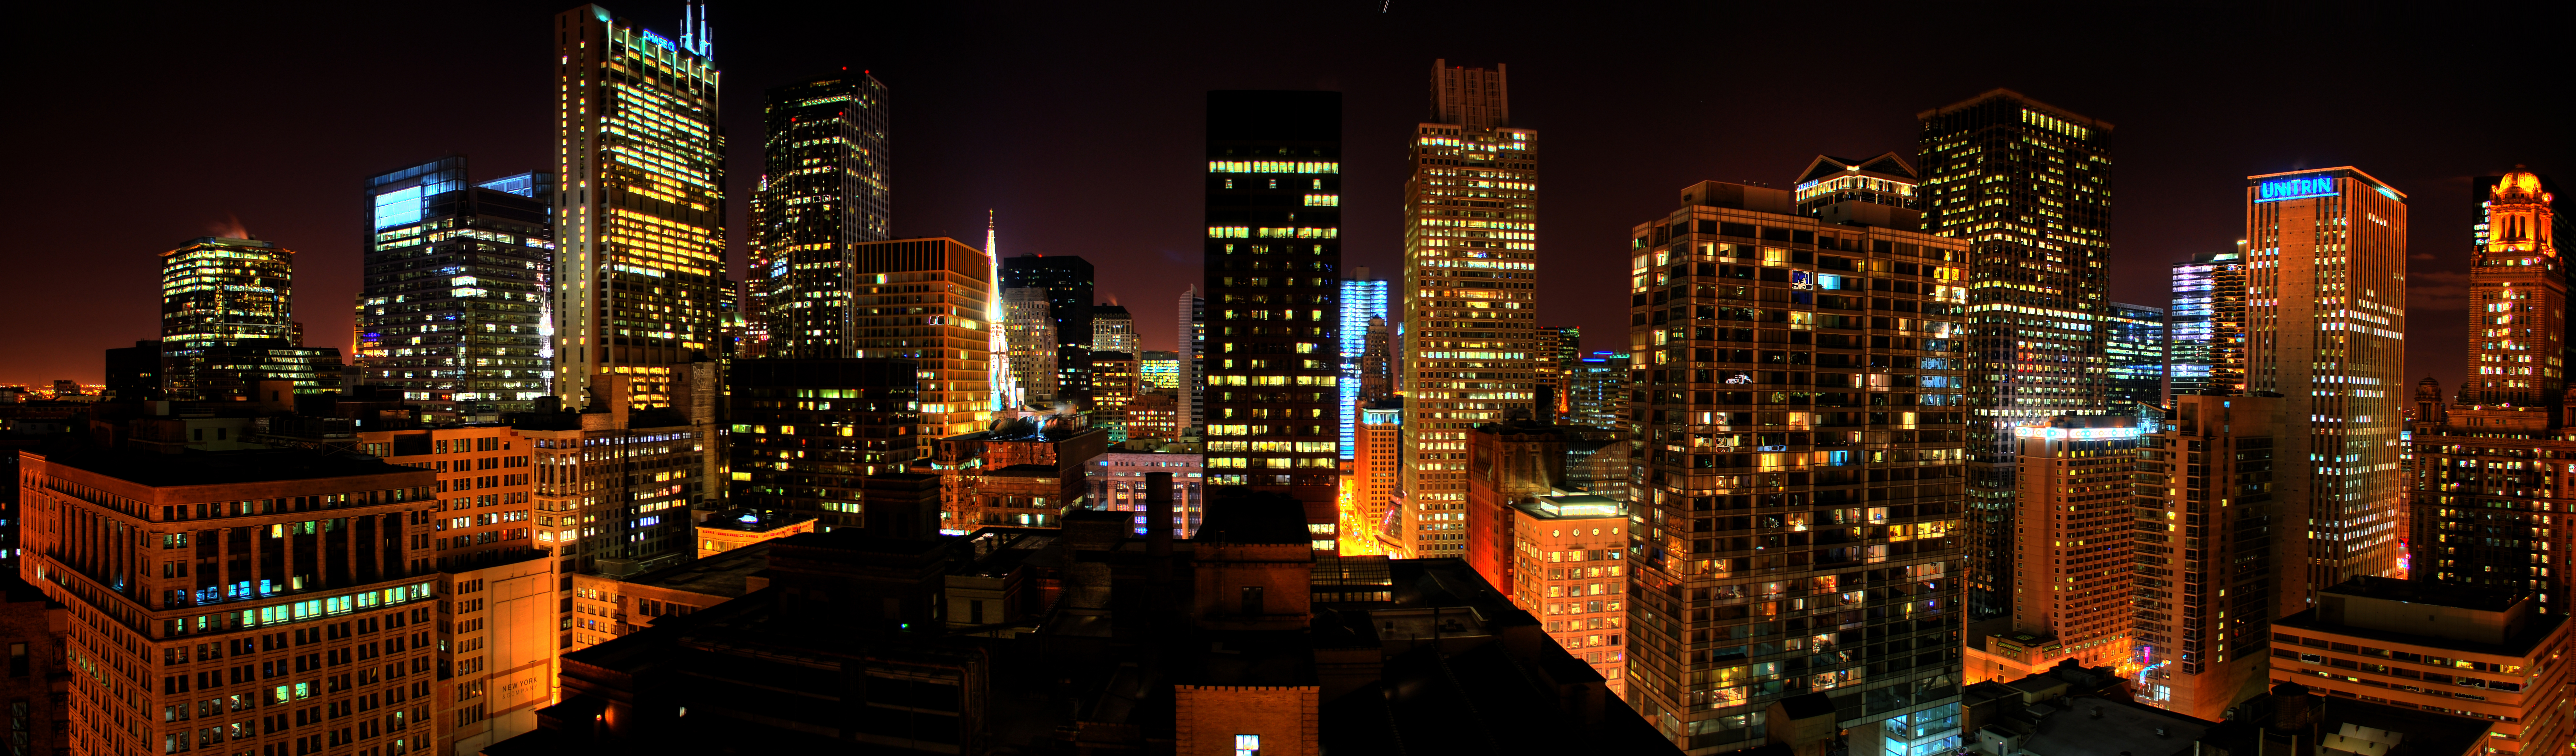 File:Chicago panorama in the night.jpg - Wikimedia Commons